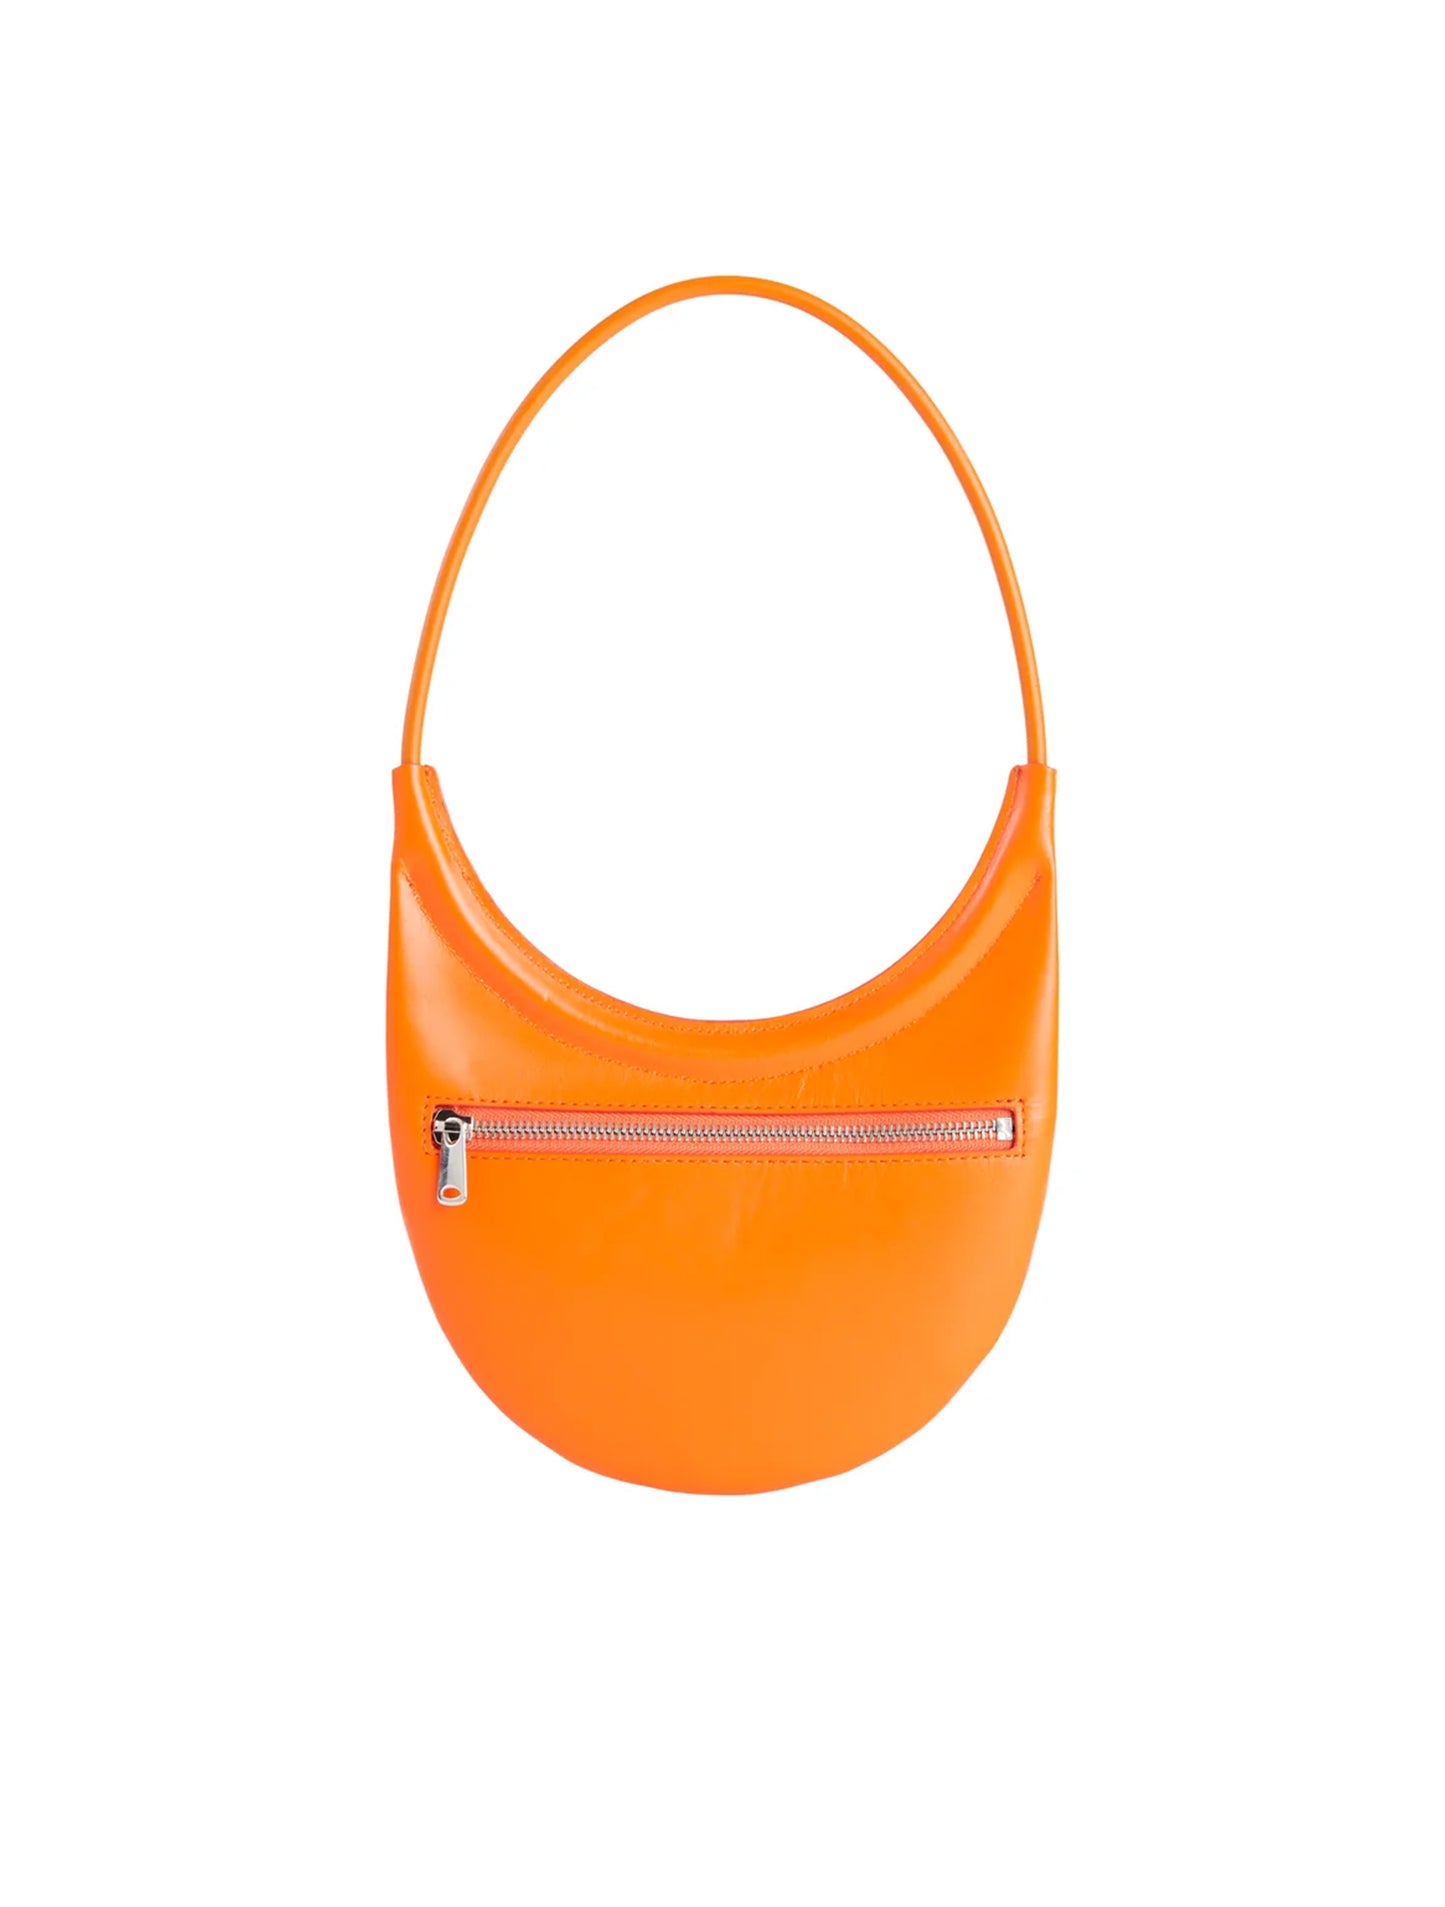 Coperni Orange Ring Swipe Bag